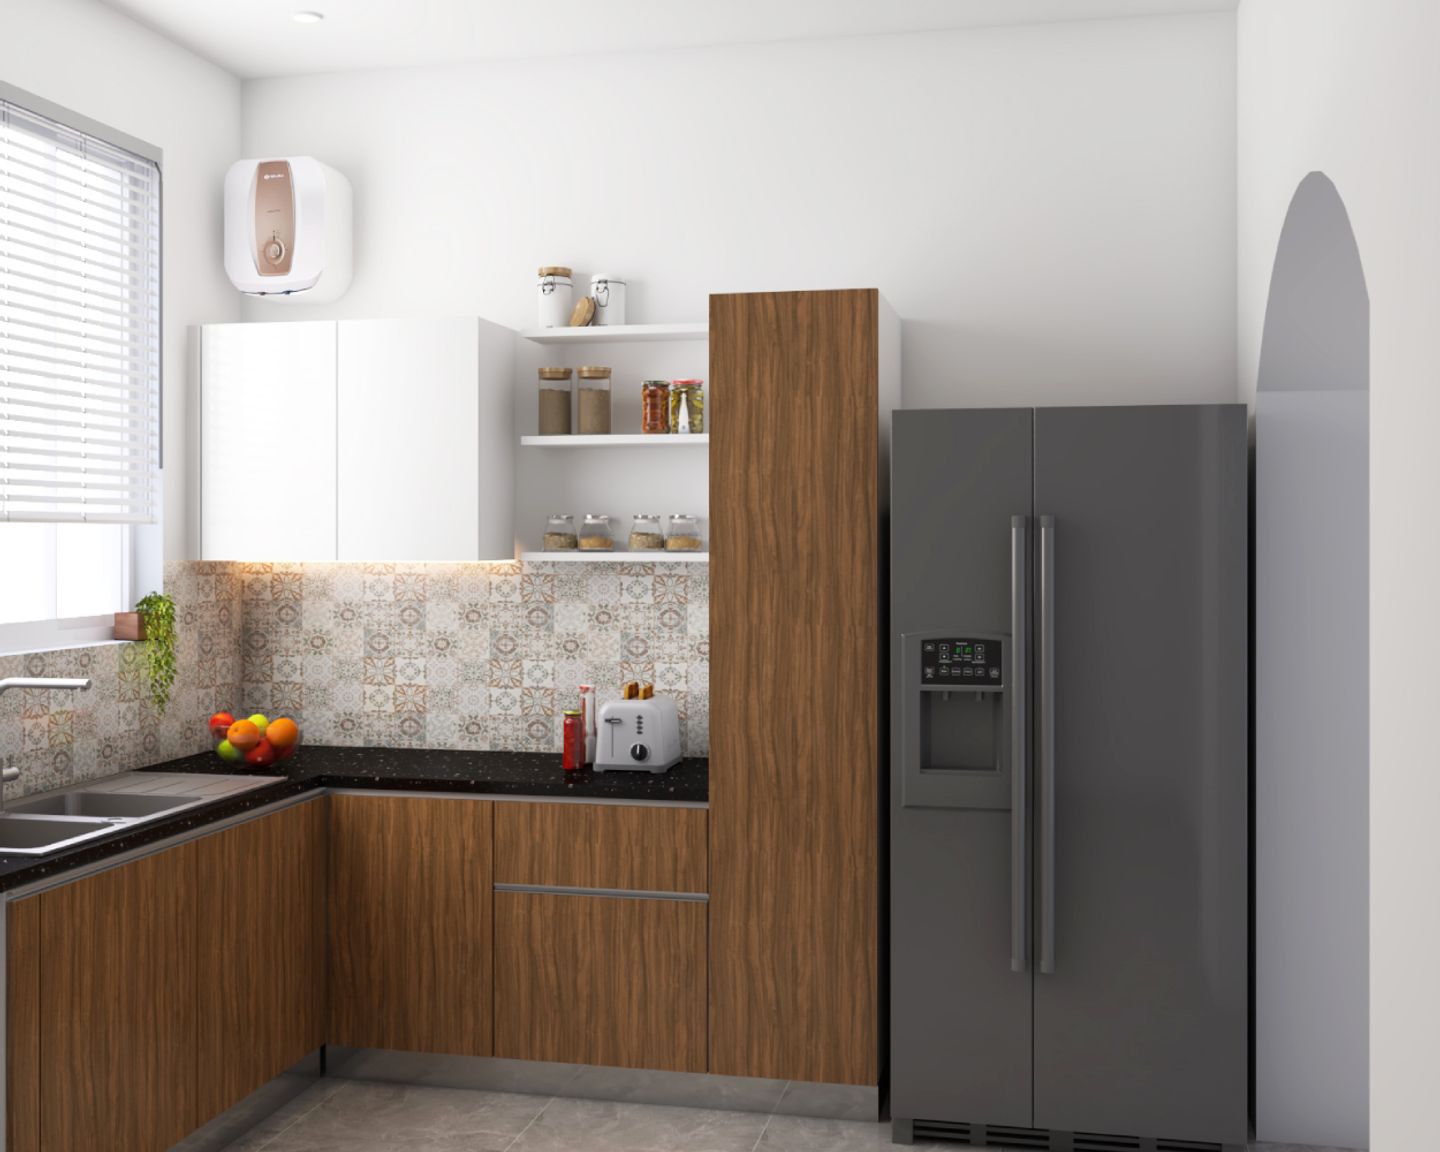 Modern White And Dark Wood U-Shaped Modular Kitchen Design With Beige Patterned Backsplash